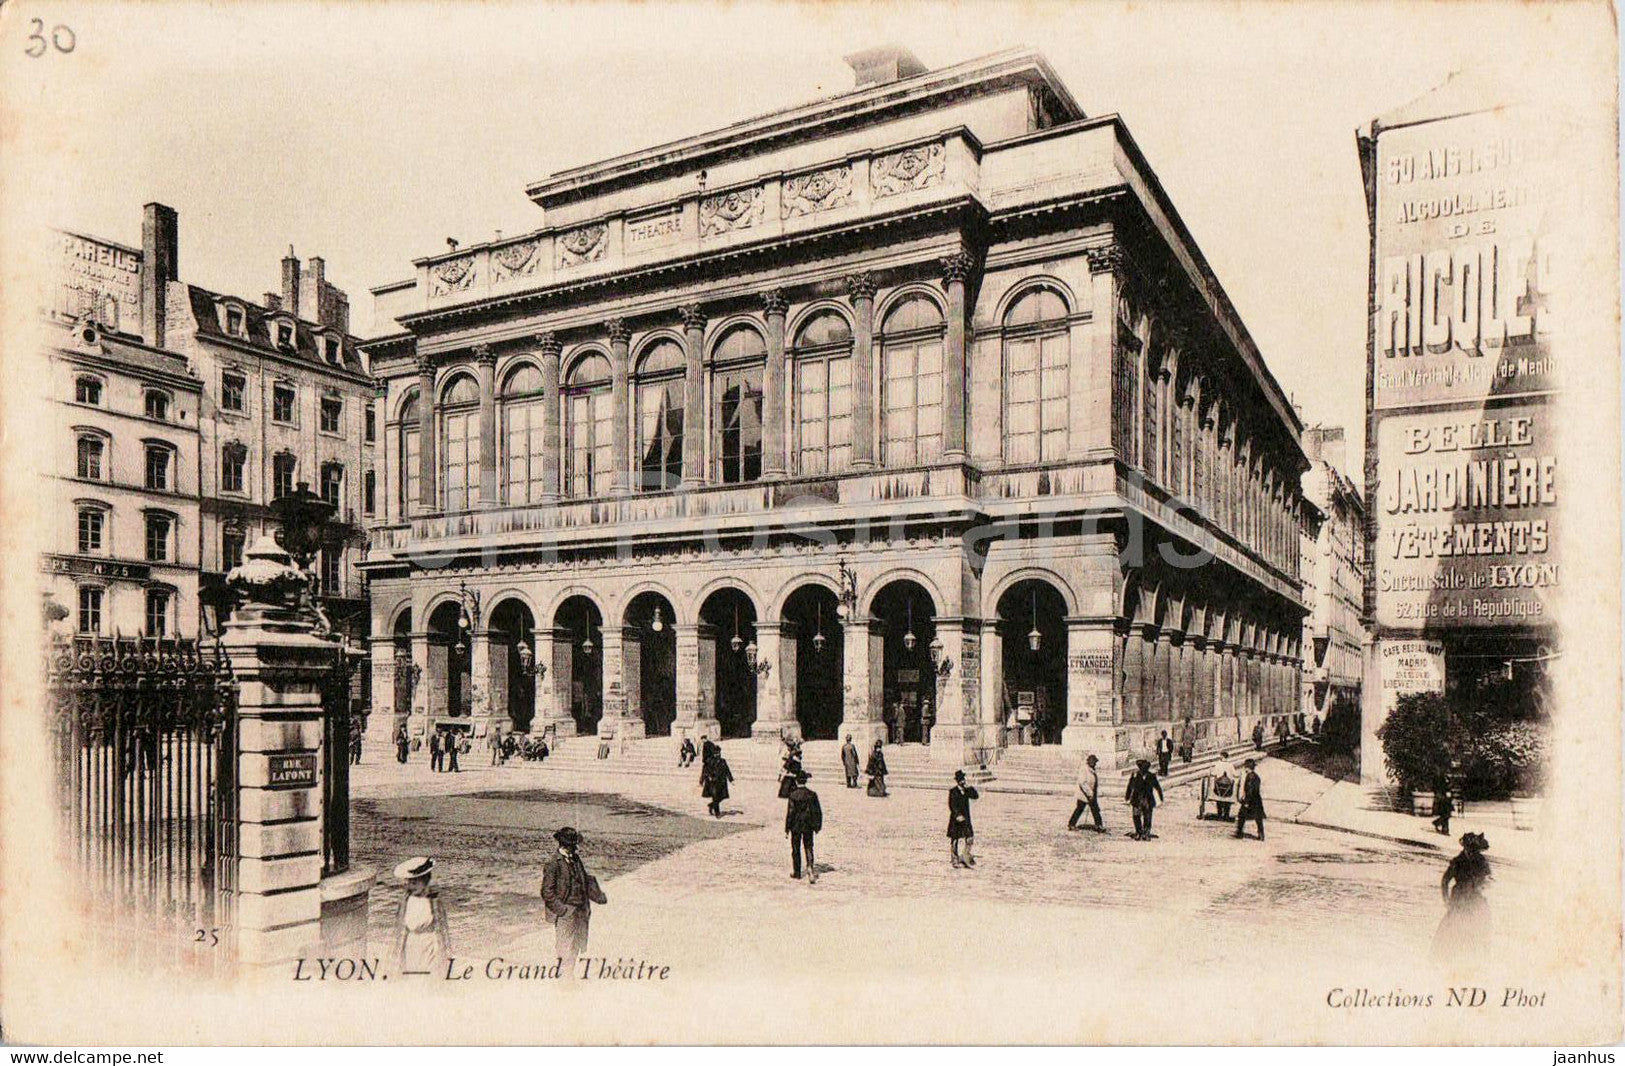 Lyon - Le Grand Theatre - 25 - old postcard - France - unused - JH Postcards